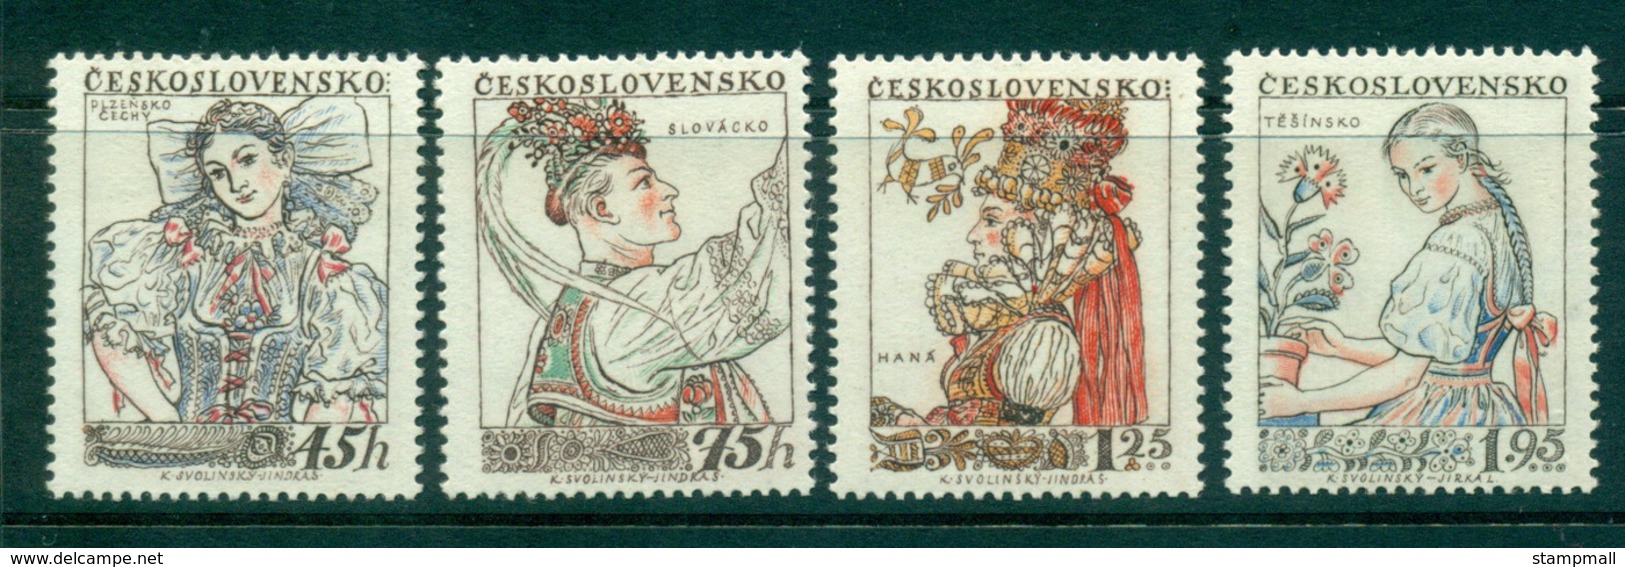 Czechoslovakia 1957 Costumes MUH Lot38293 - Unused Stamps